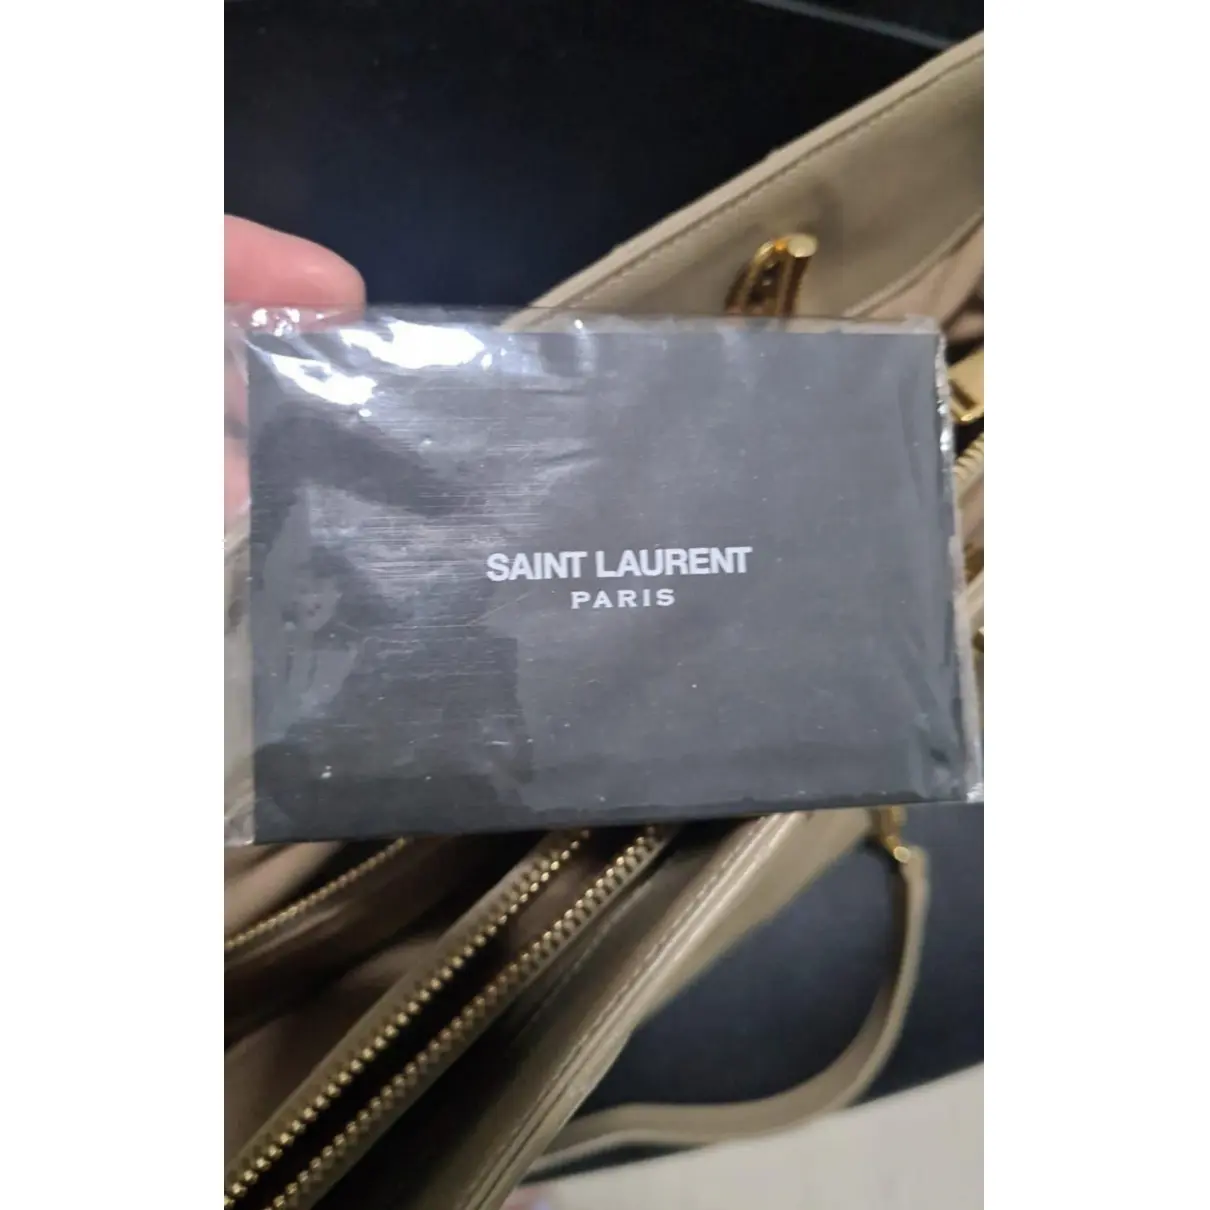 Buy Saint Laurent Shopping monogramme leather handbag online